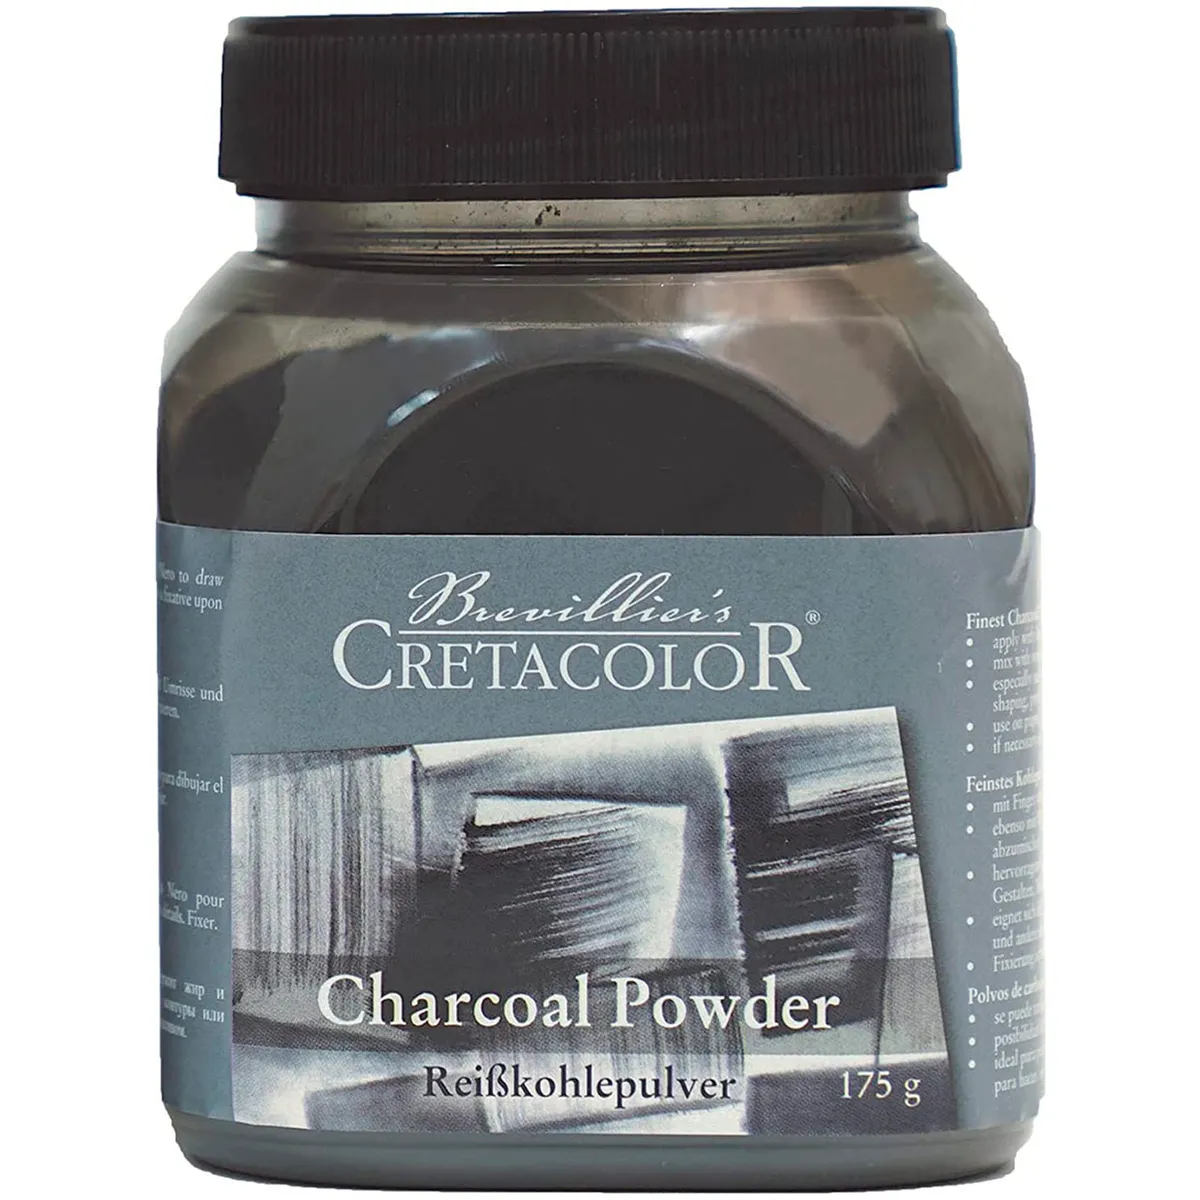 Brevillier's Cretacolor Kneaded Eraser putty rubber (grey)